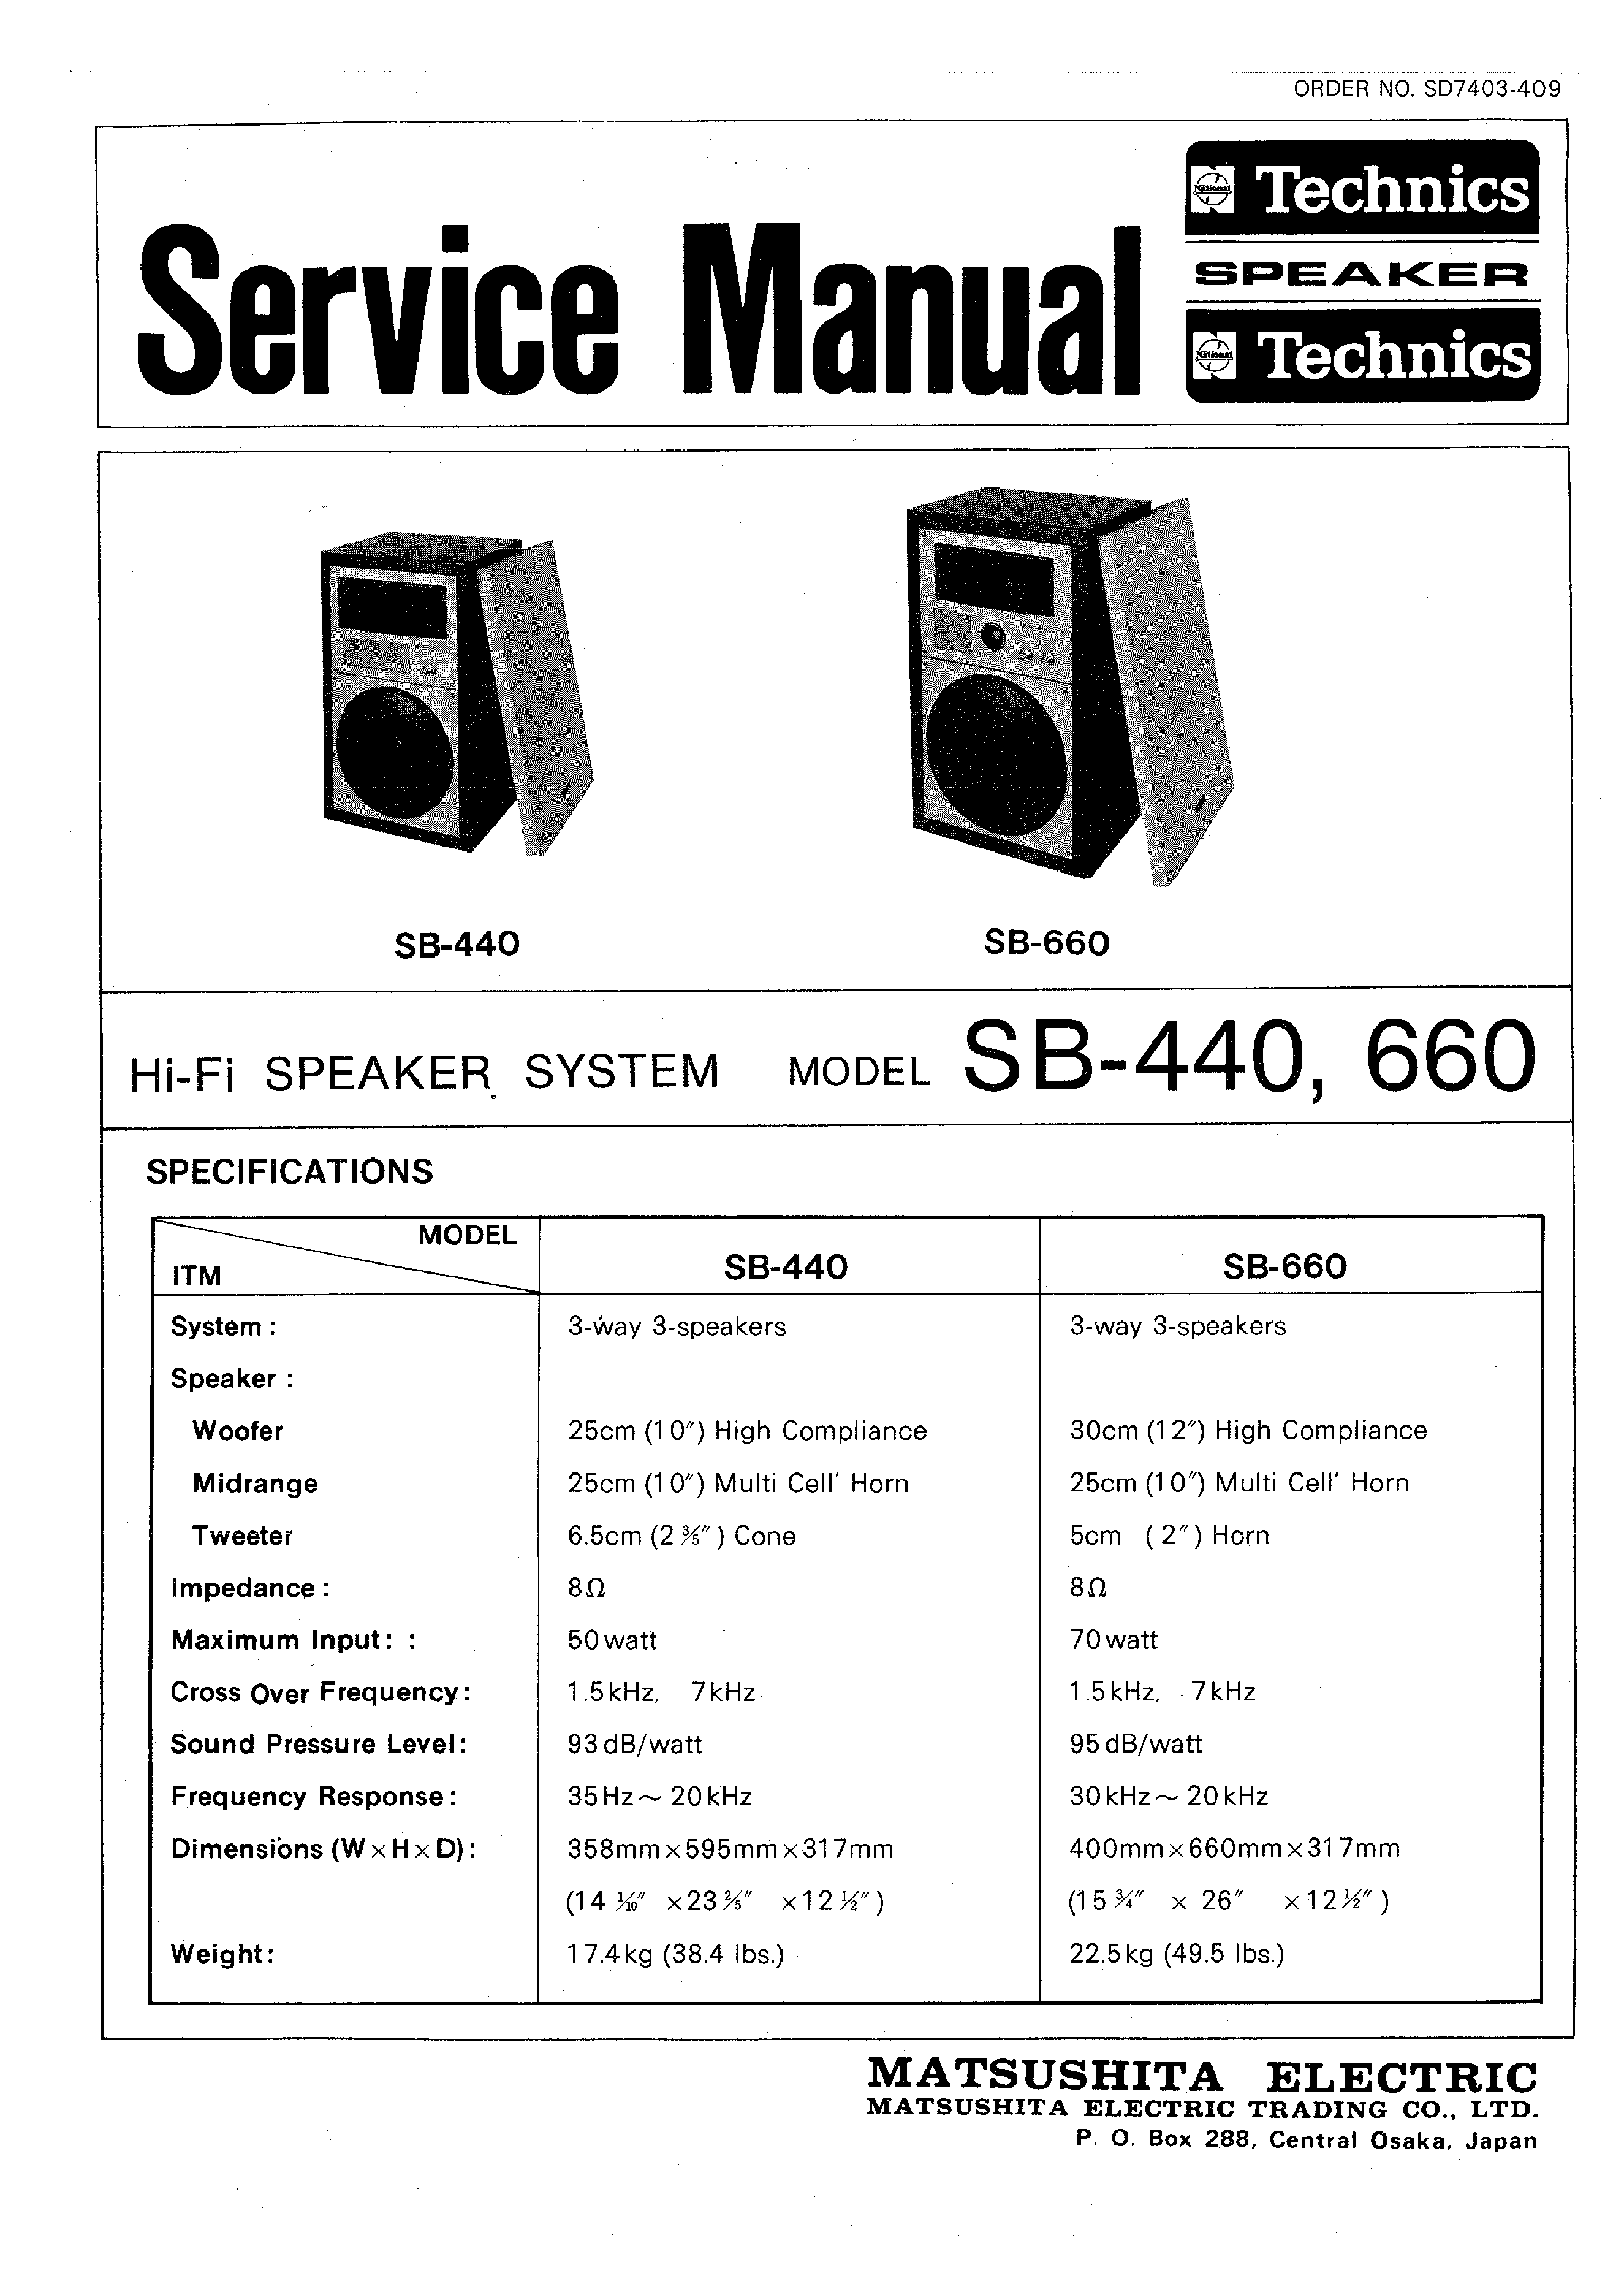 Service Manual for TECHNICS SB-440 - Download